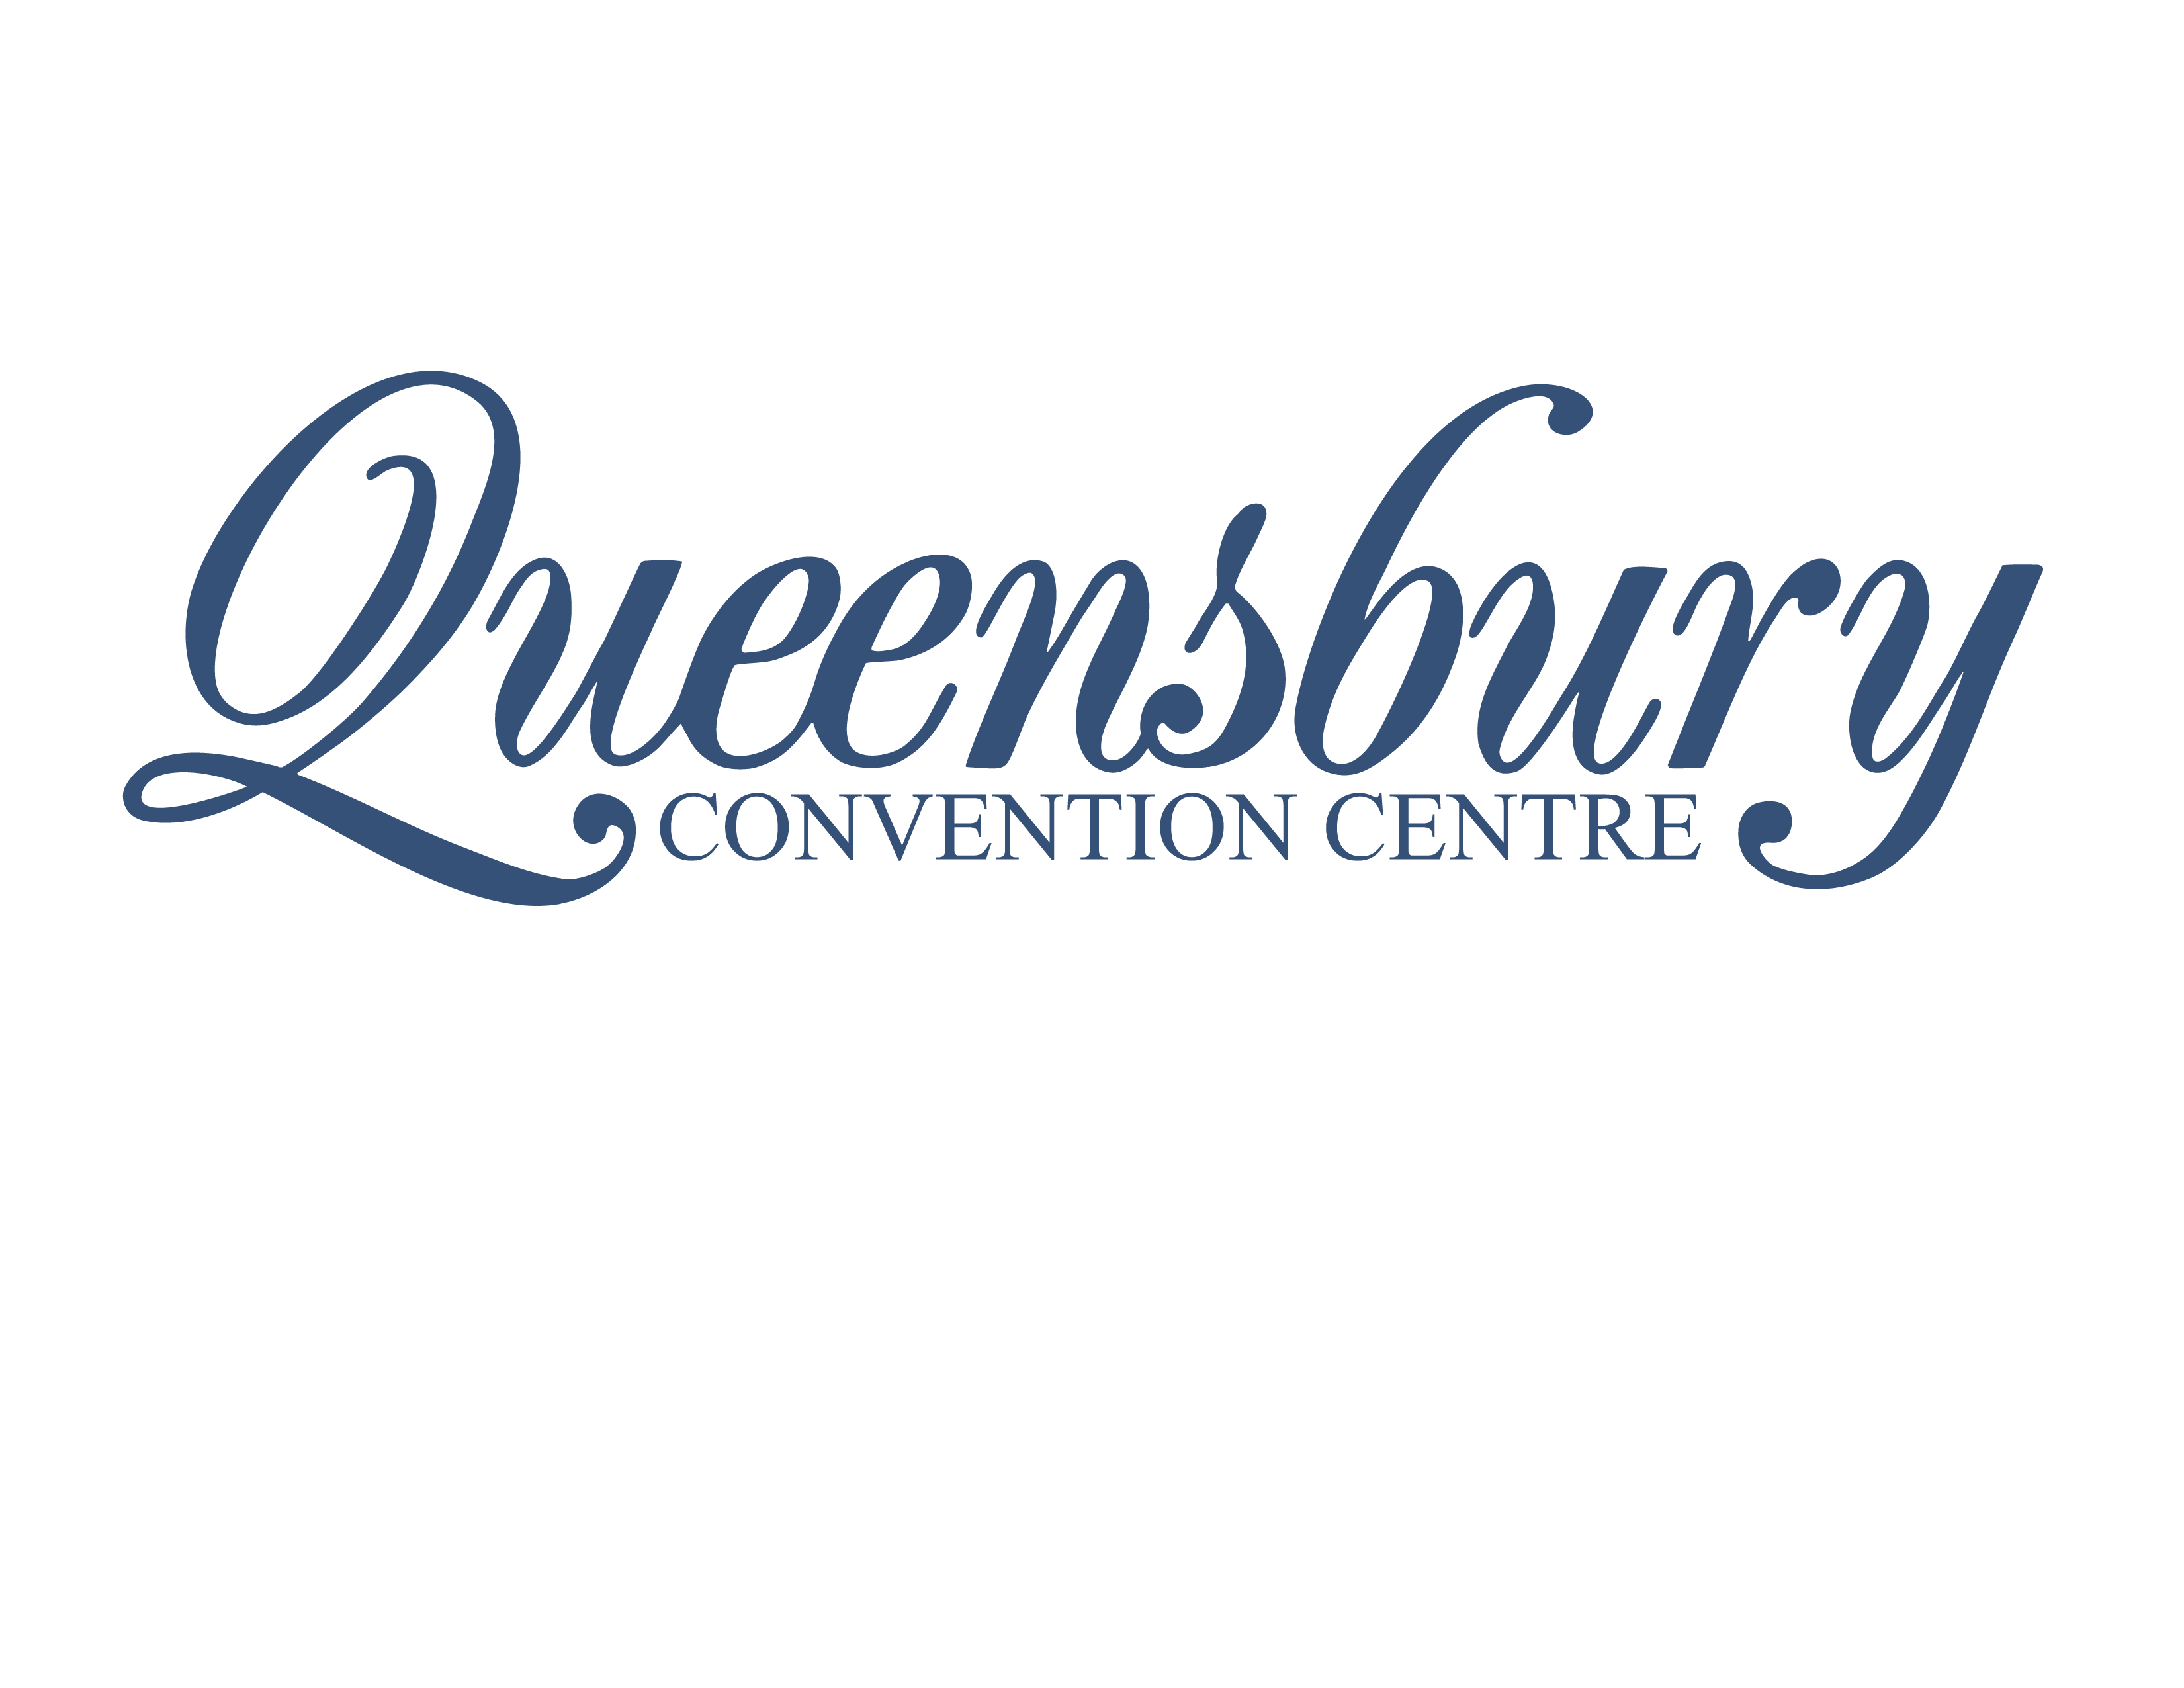 Queensbury Convention Centre - slate logo